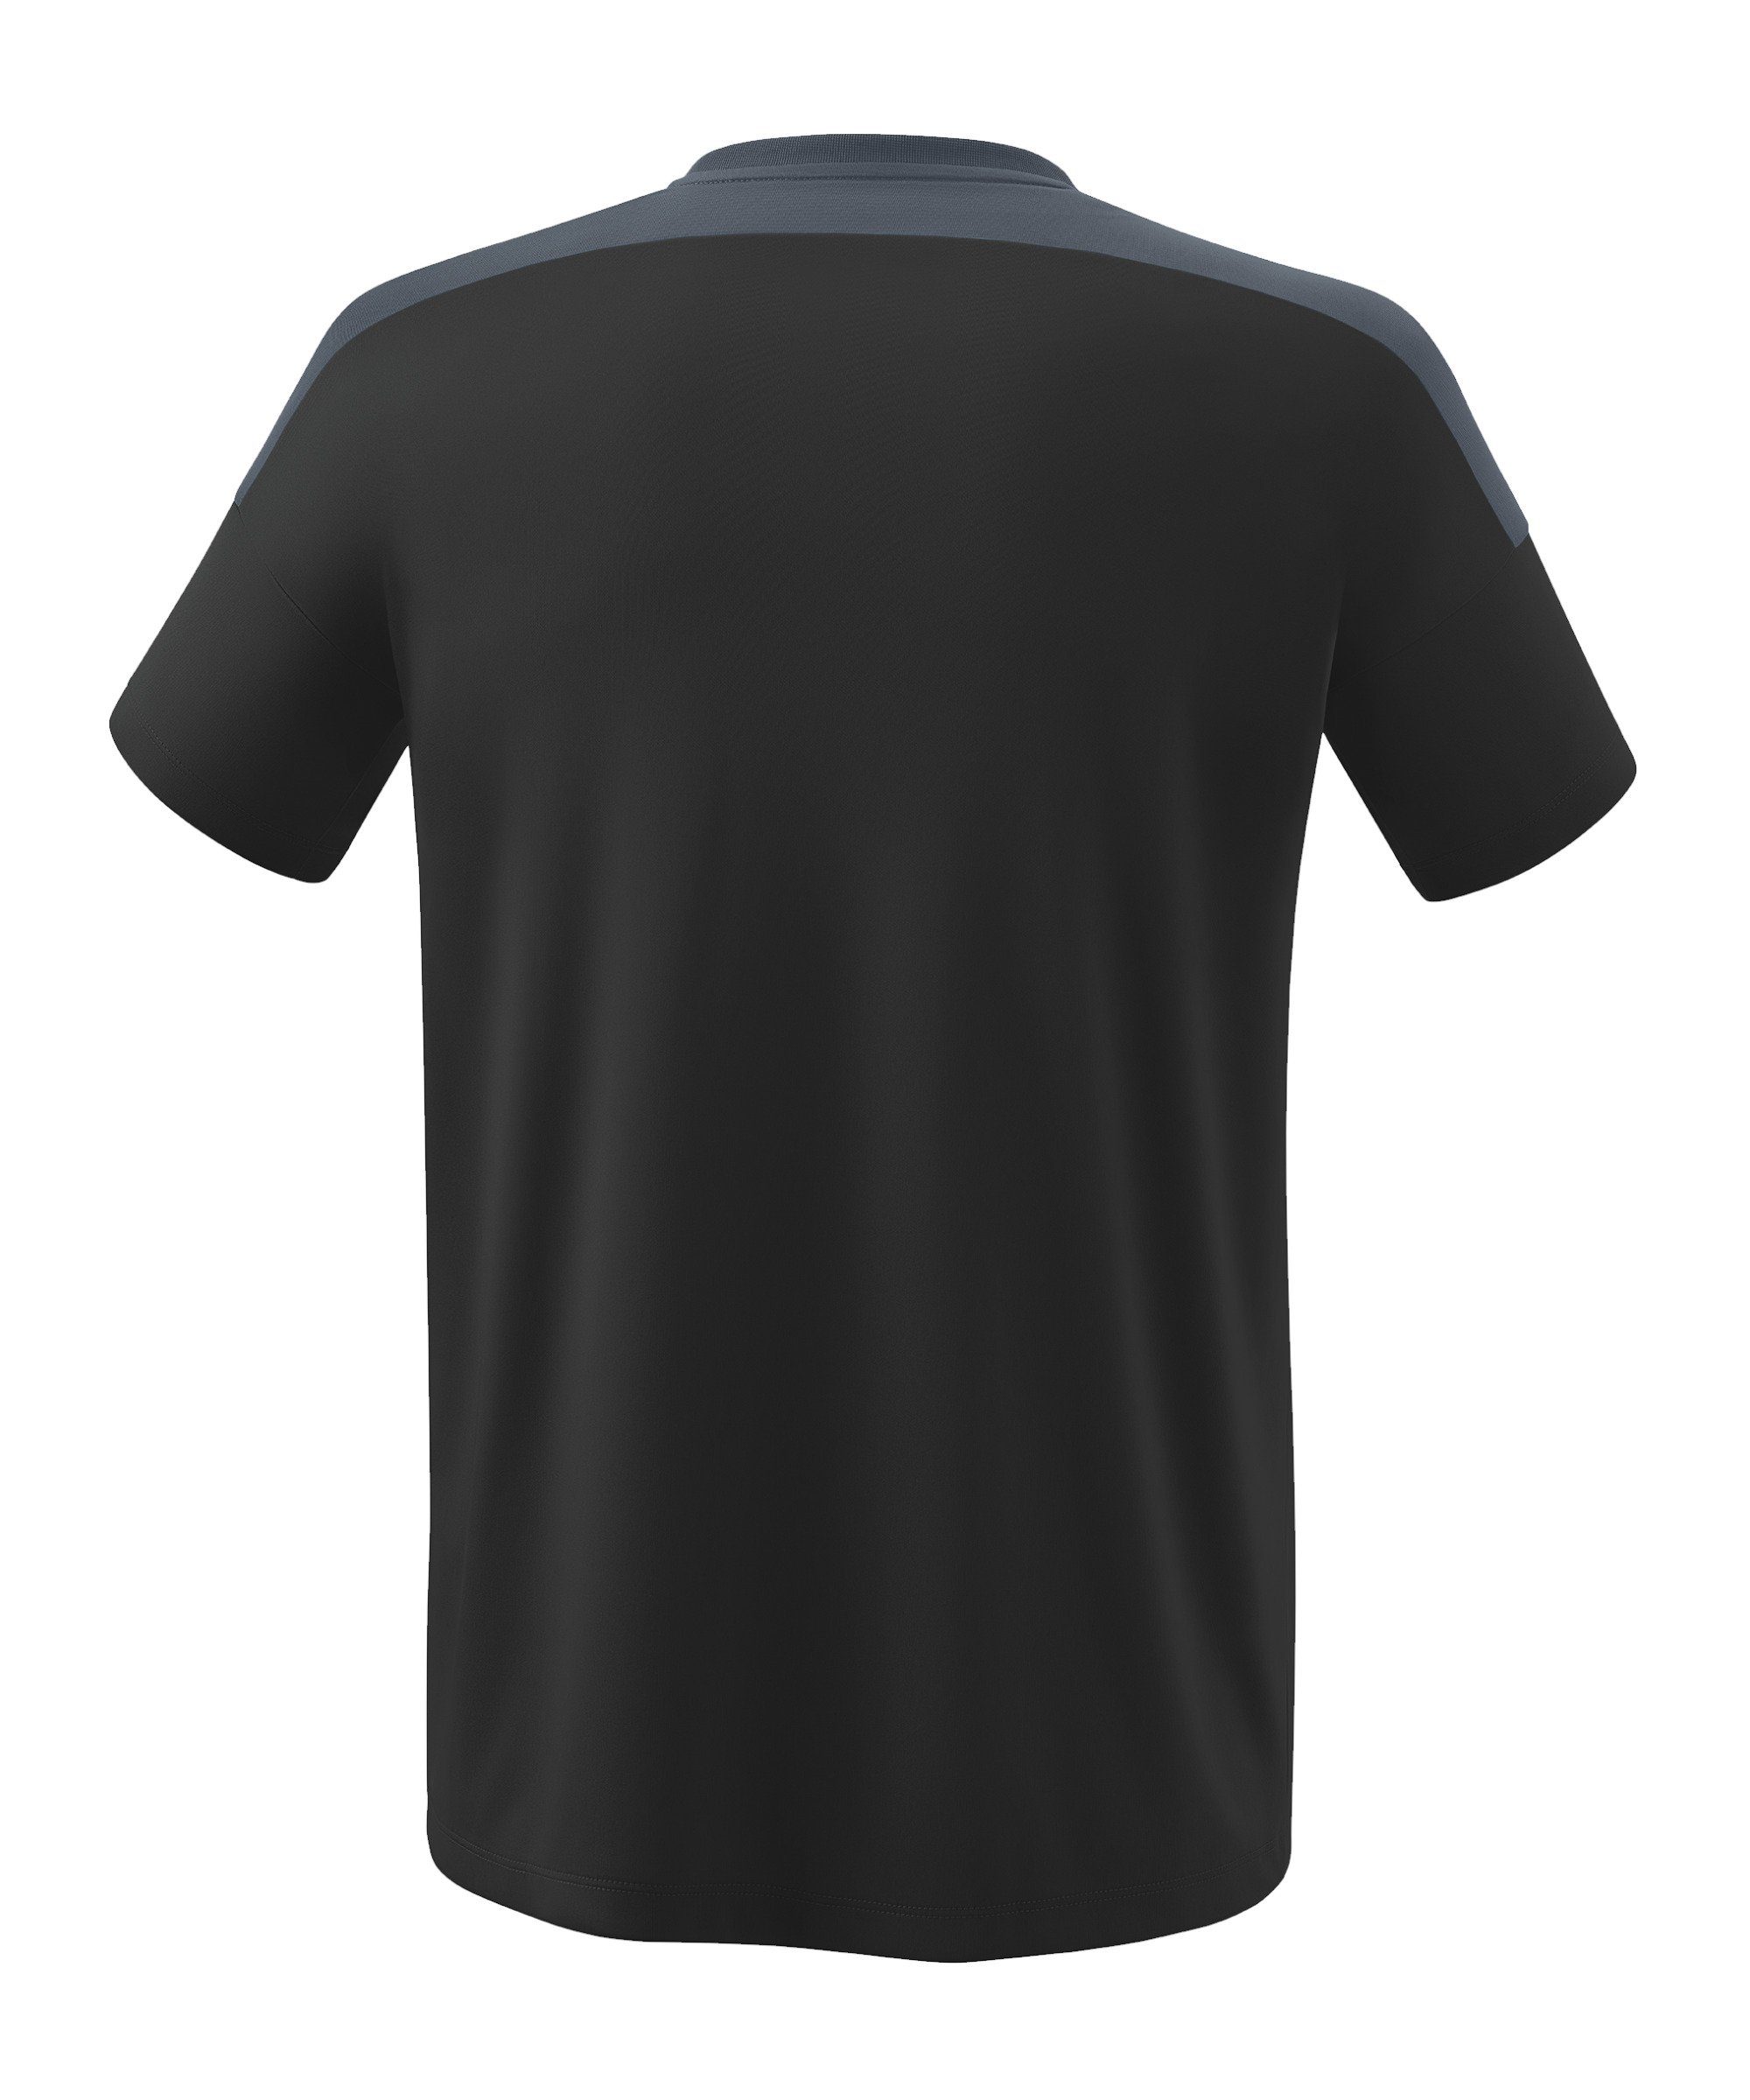 Erima T-Shirt Change grau default T-Shirt by